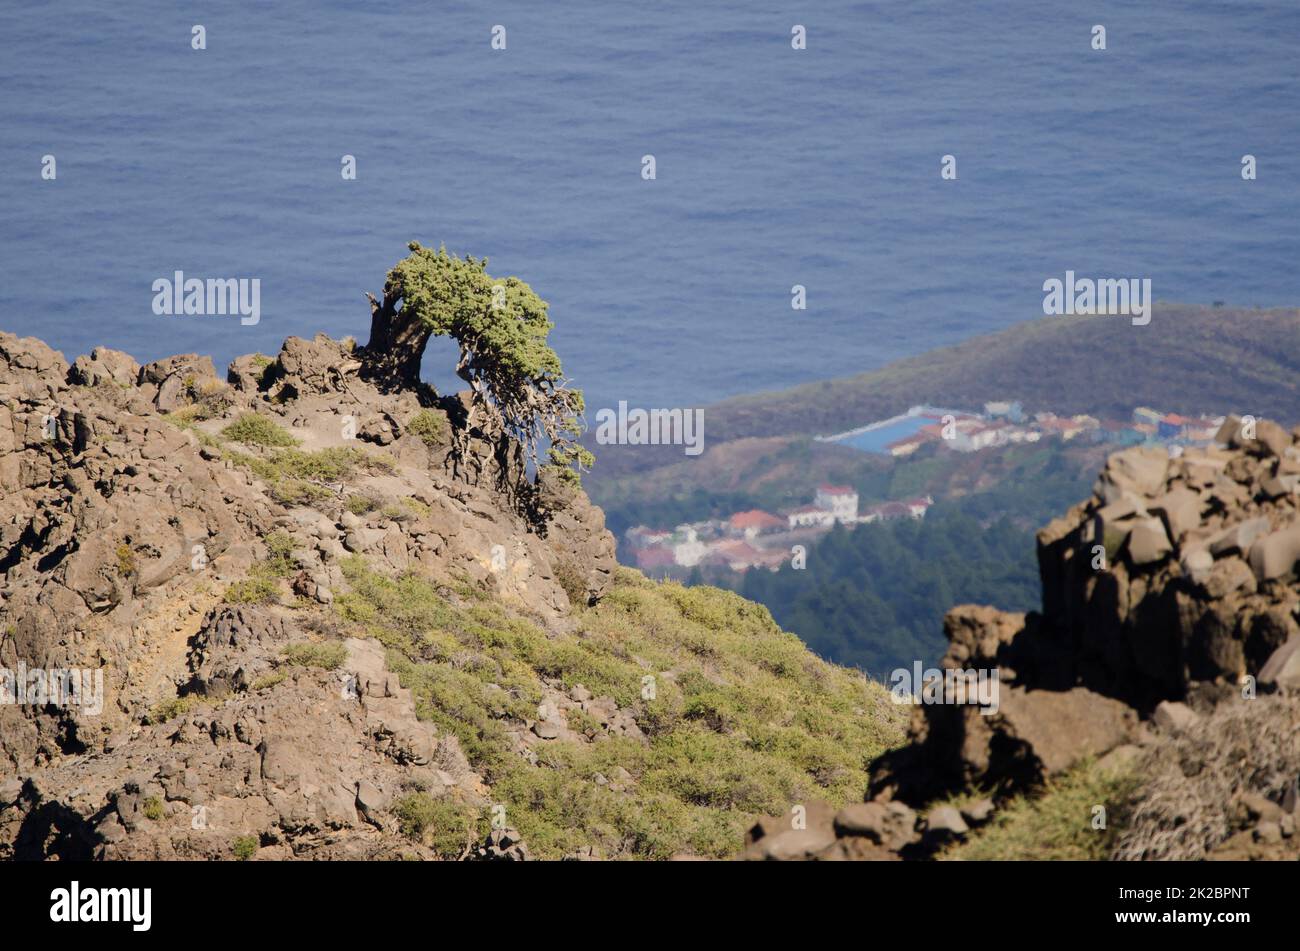 Canary Islands juniper Juniperus cedrus. Stock Photo